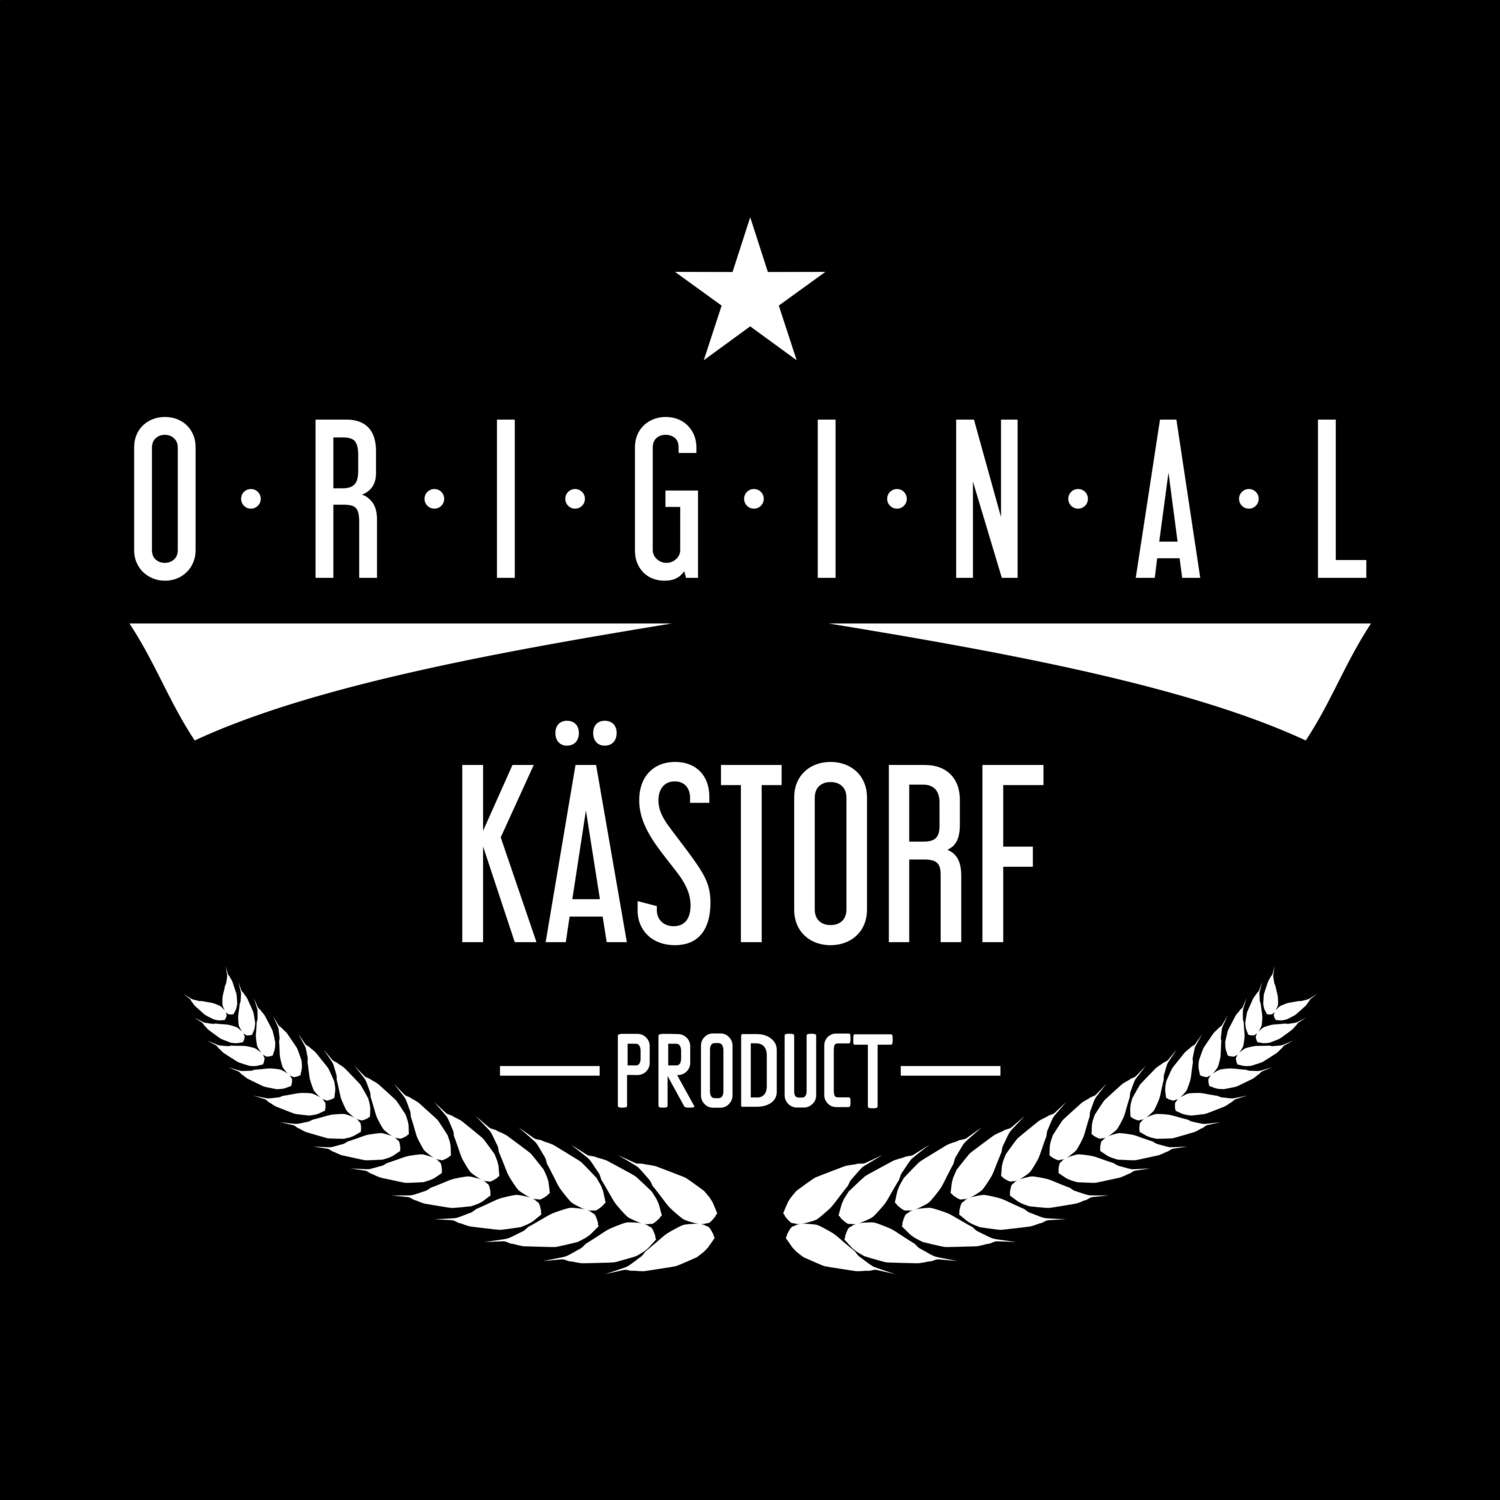 Kästorf T-Shirt »Original Product«